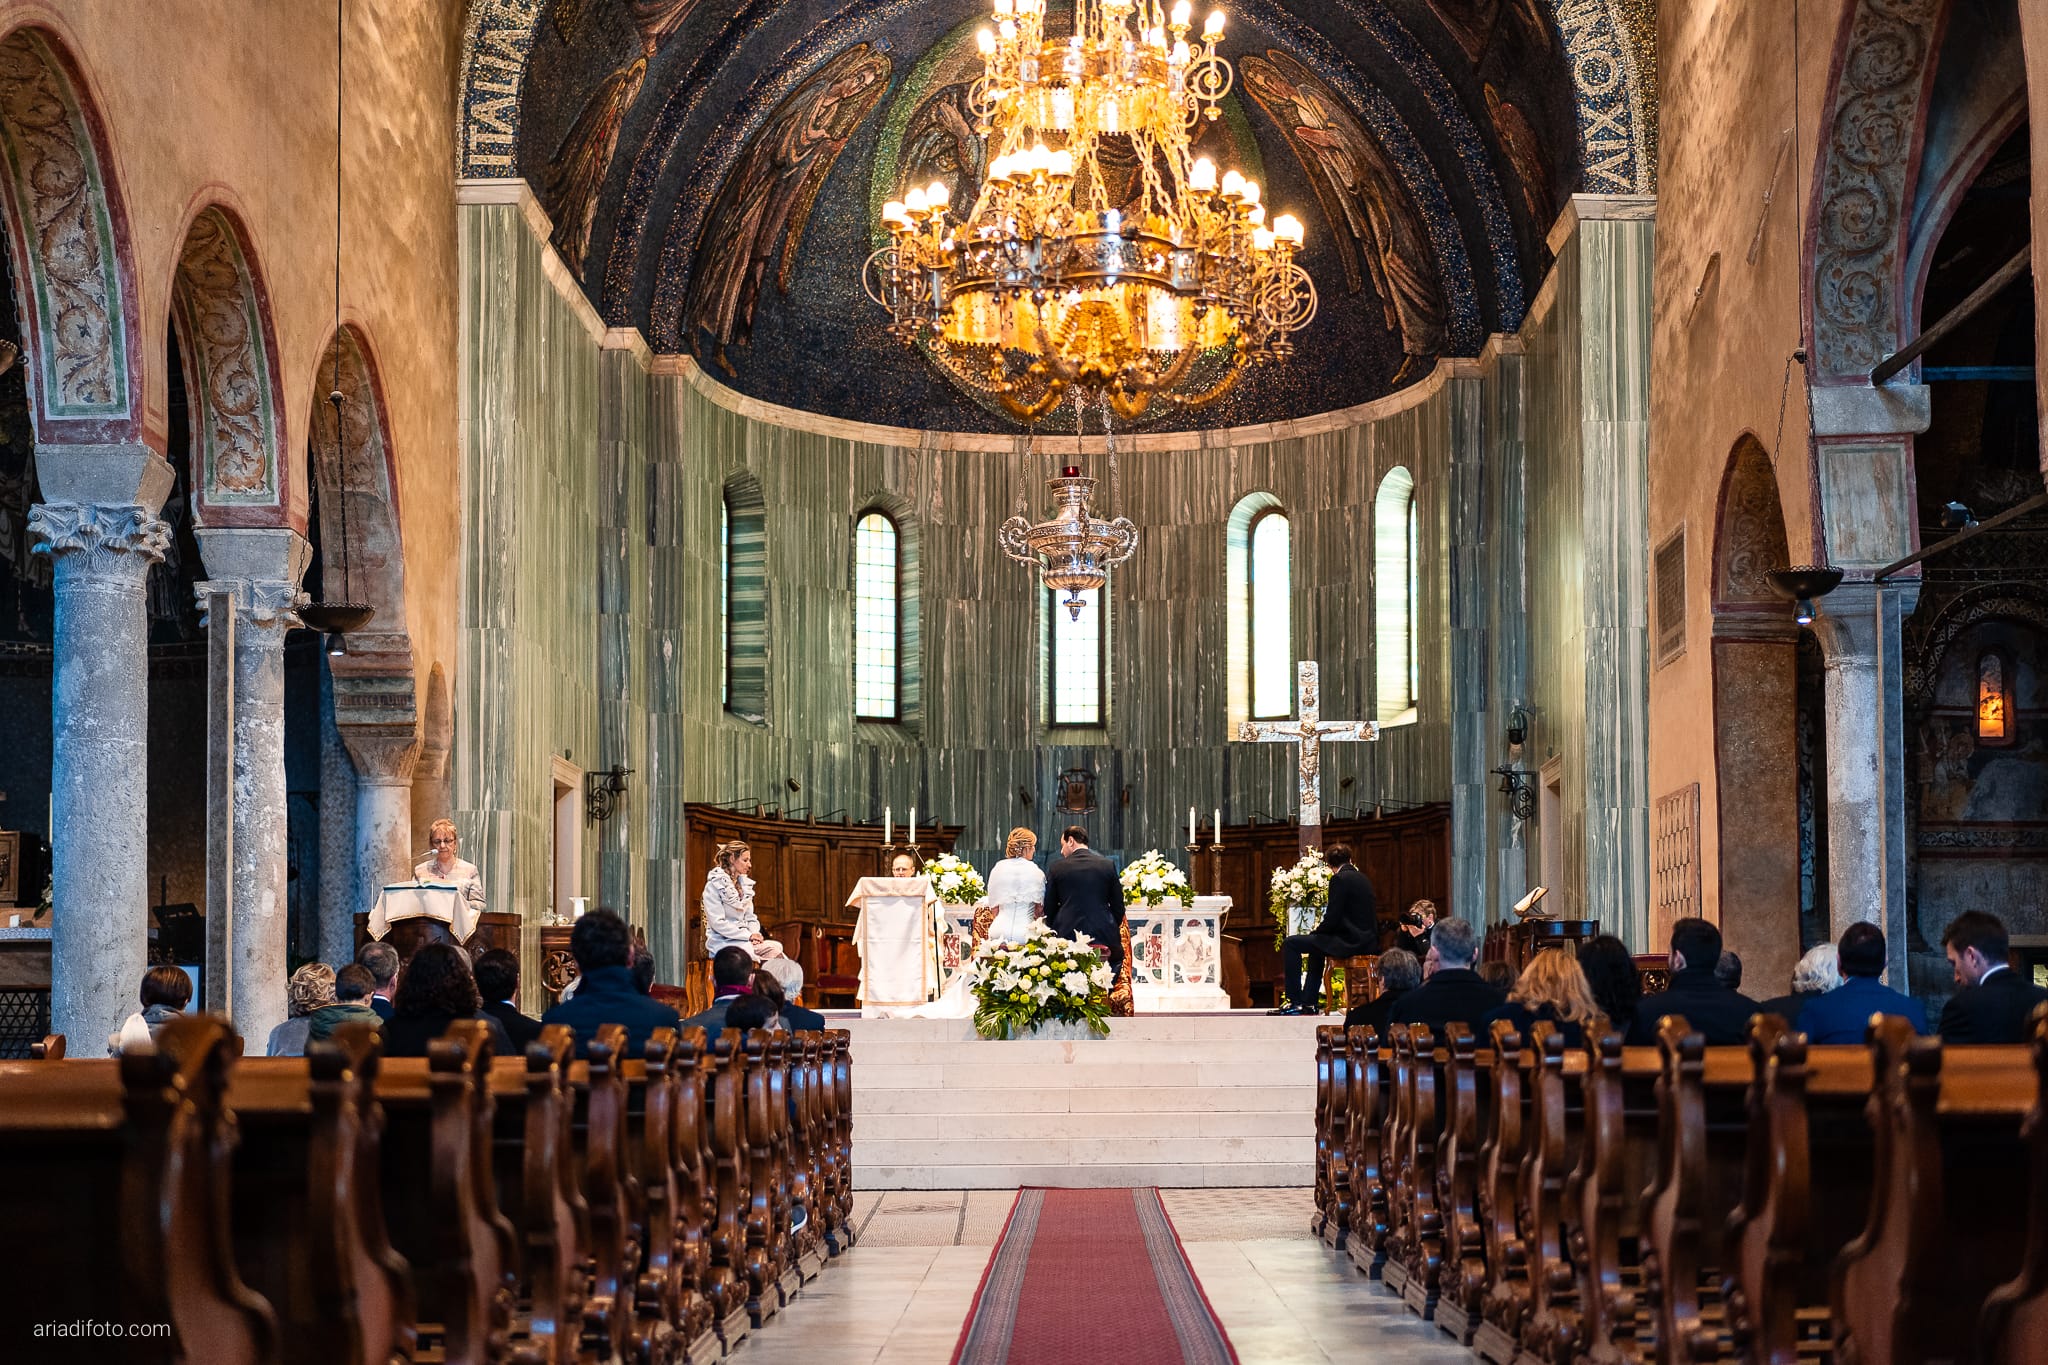 Elena Guido Matrimonio elegante Savoia Excelsior Palace Trieste cerimonia Cattedrale San Giusto chiesa altare navata